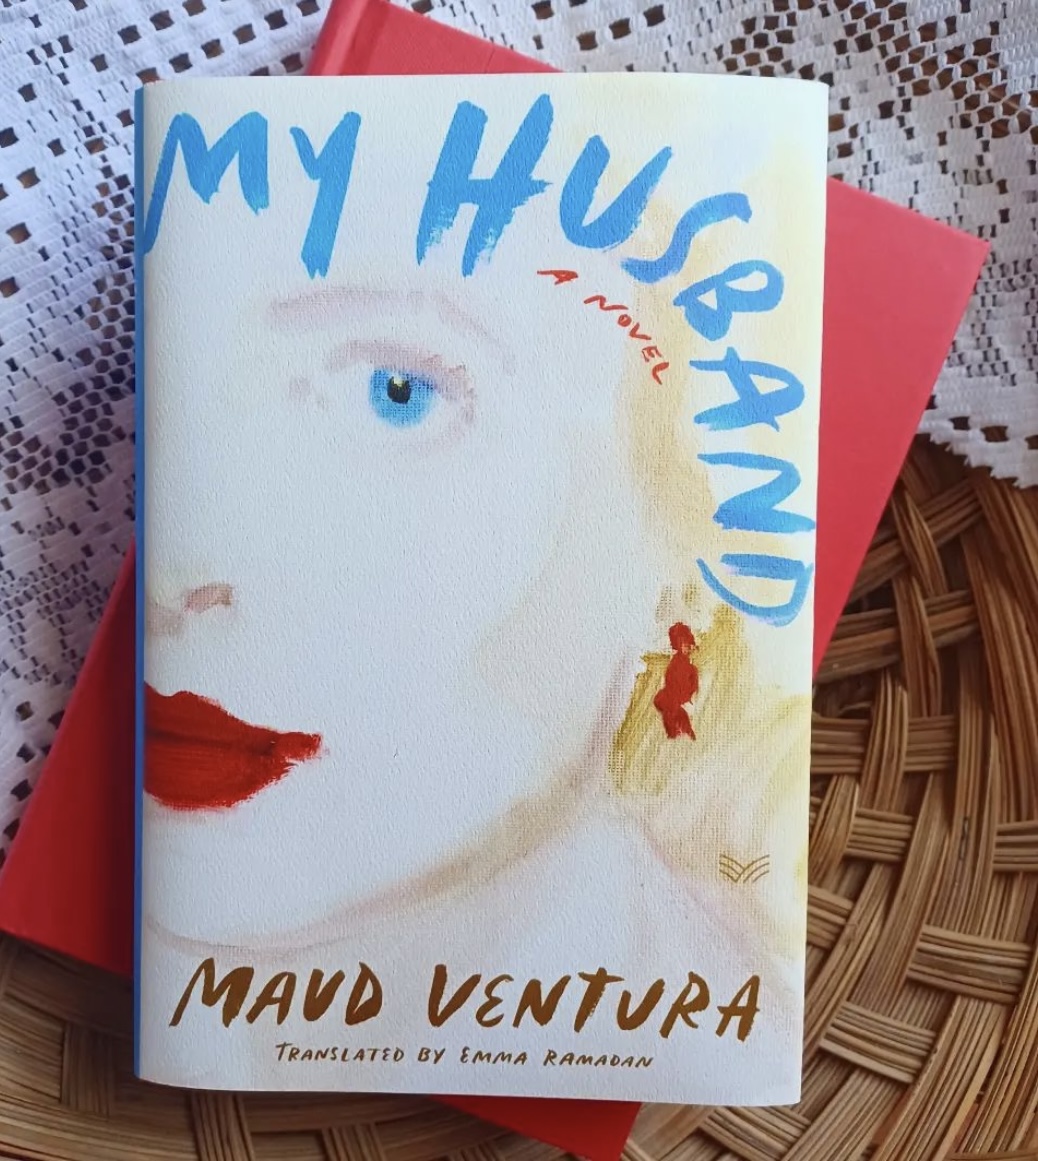 My Husband a novel by Maud Ventura